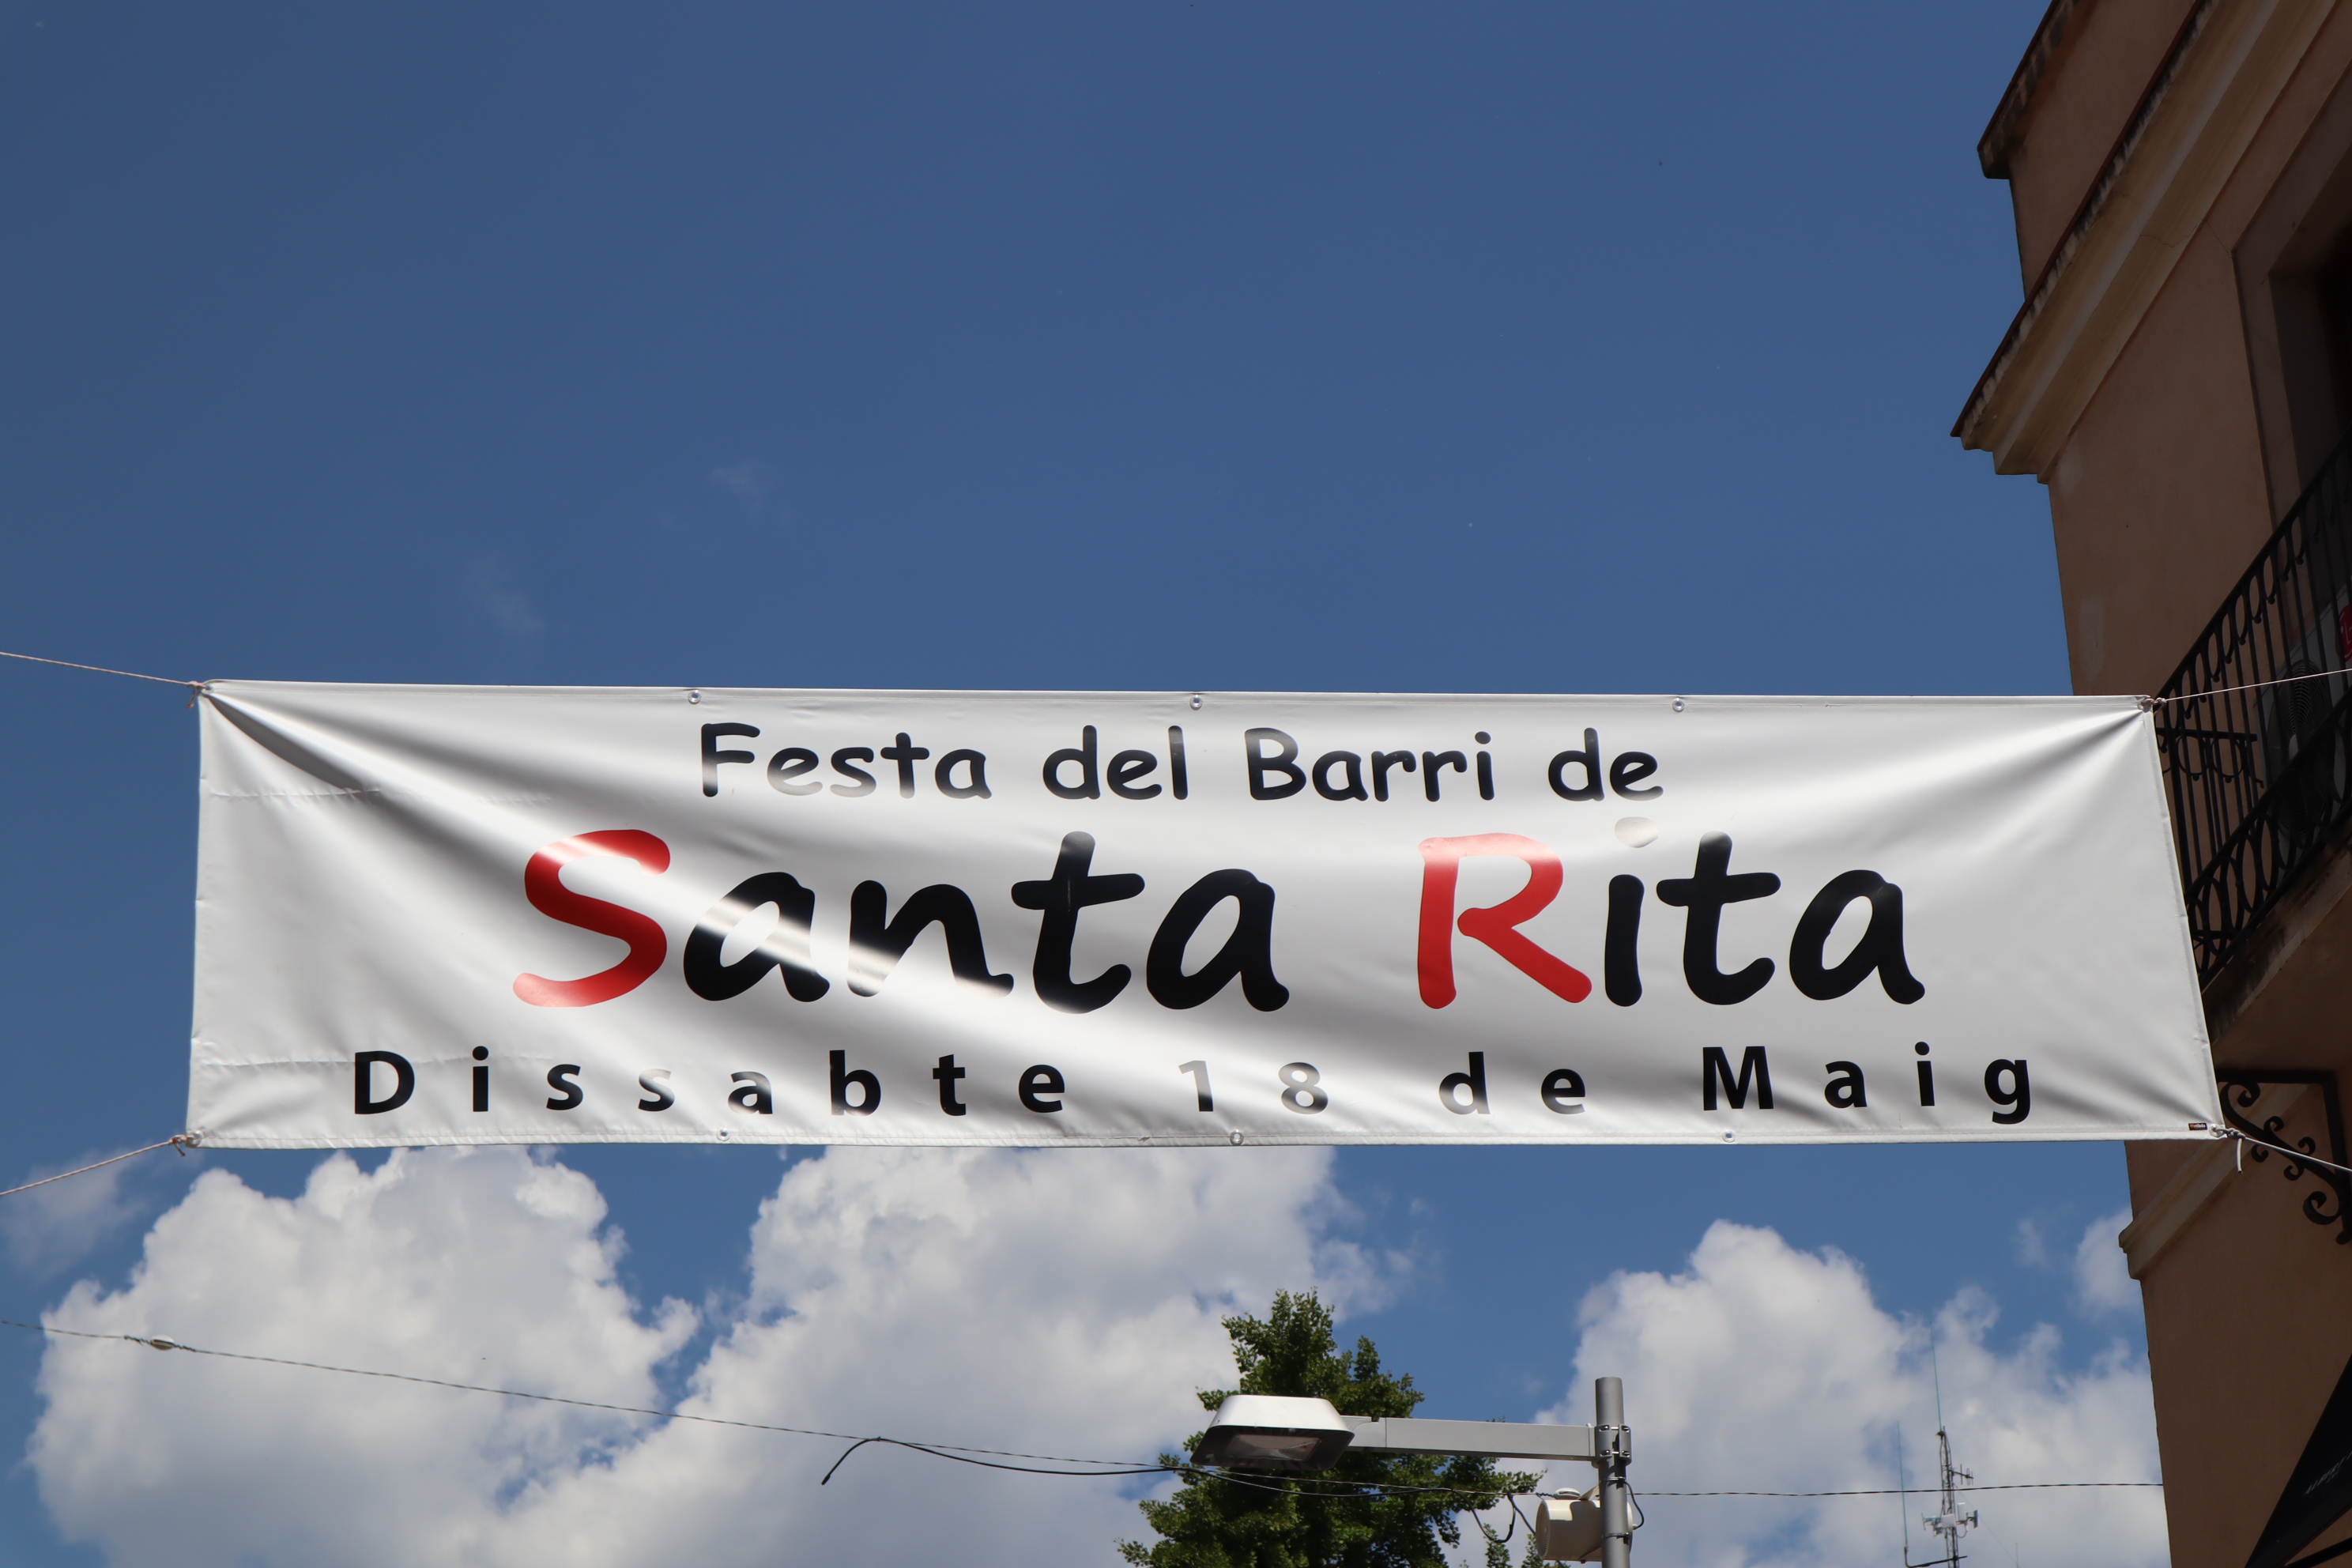 Festa del Barri de Santa Rita